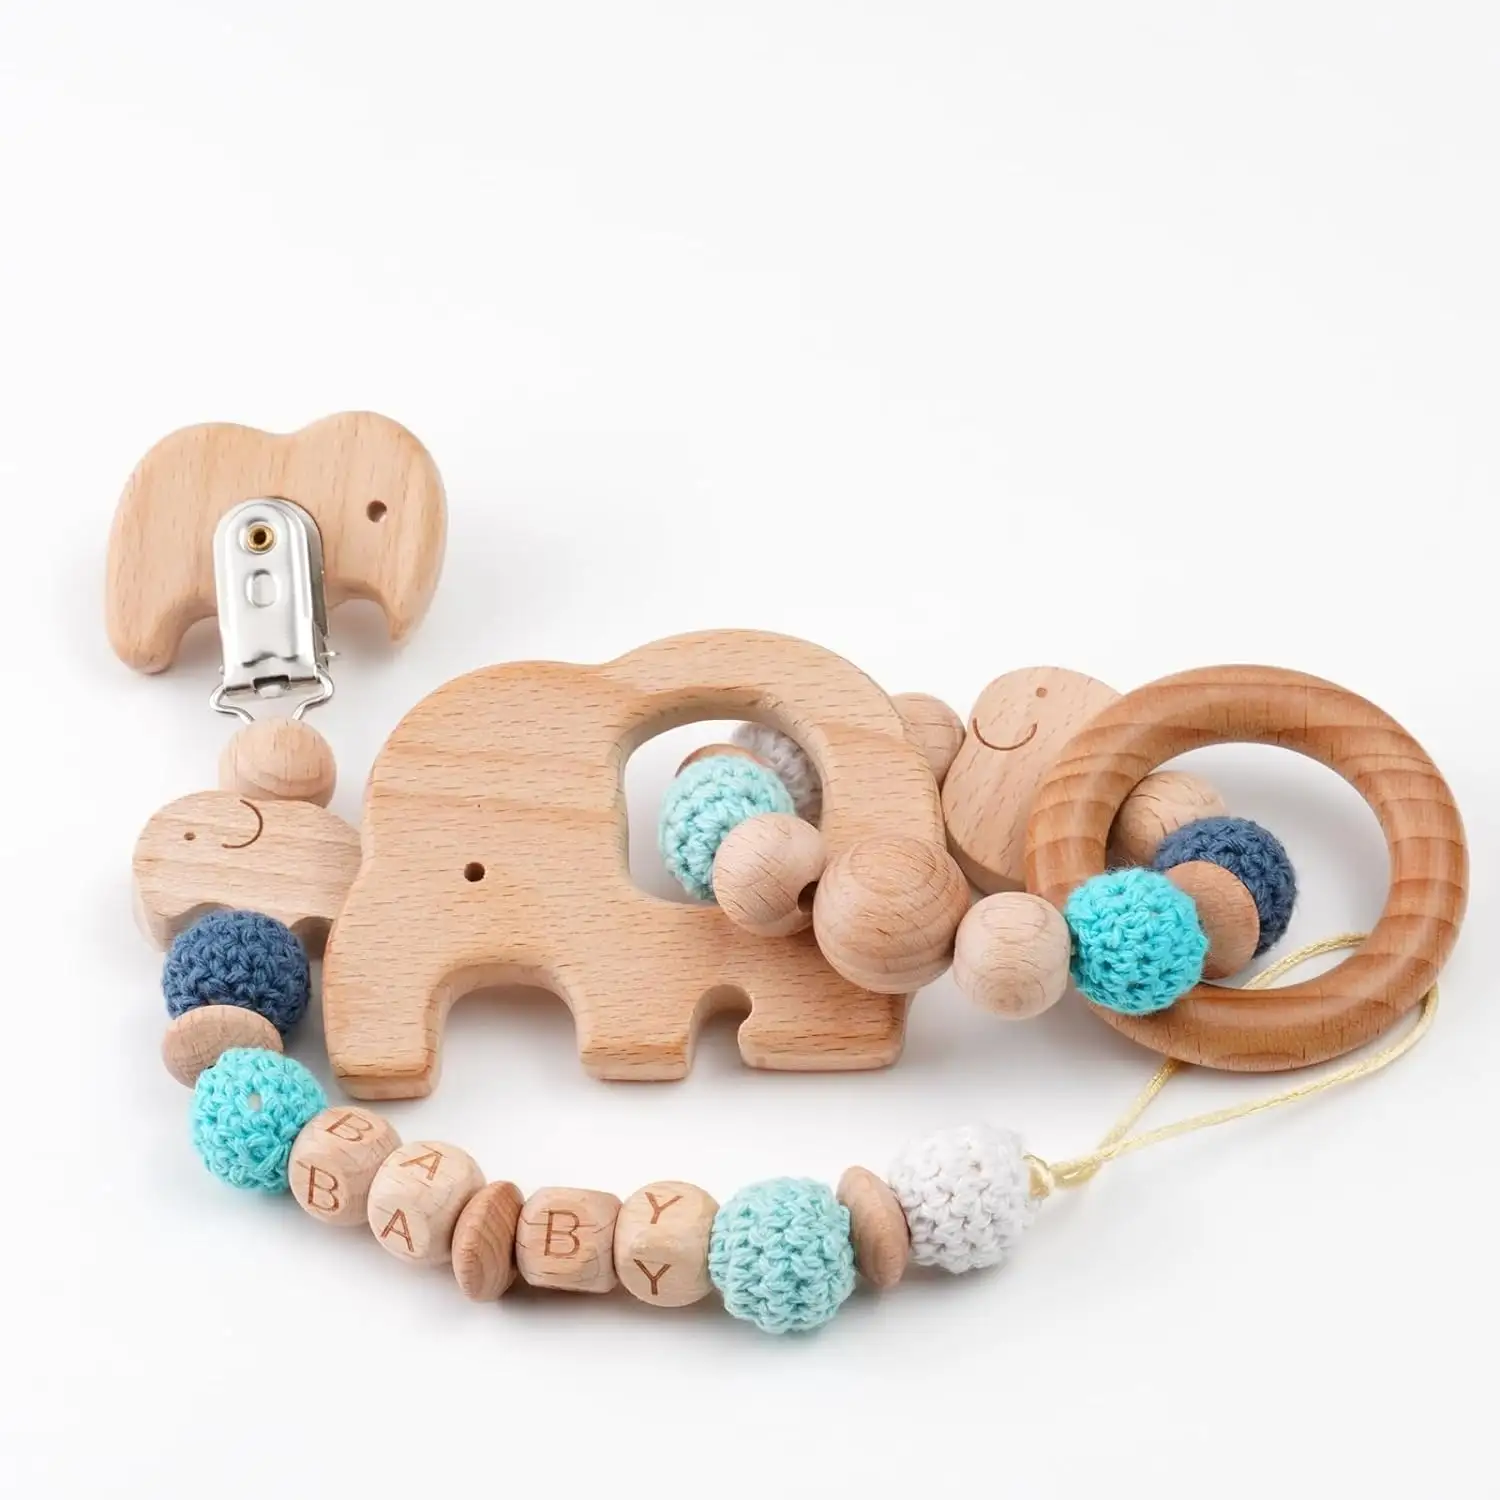 Set mainan gigi kayu (paket 2) cocok untuk bayi usia 0-6 bulan, bayi: mainan kerincingan, cincin dan mainan kursi mobil-mobilan Ideal Soothi